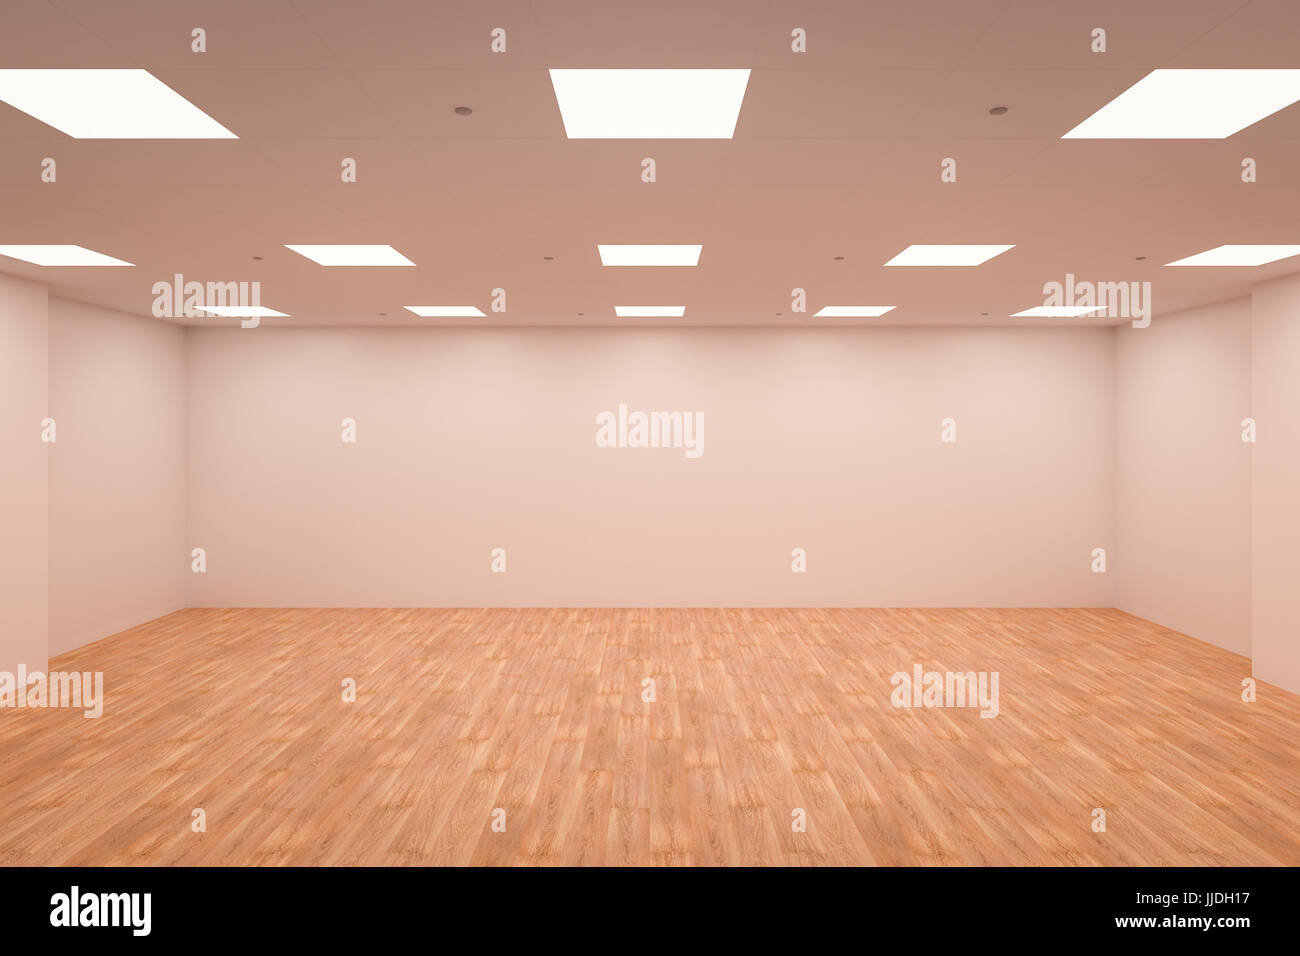 3d rendering empty office space with wooden floor Stock Photo